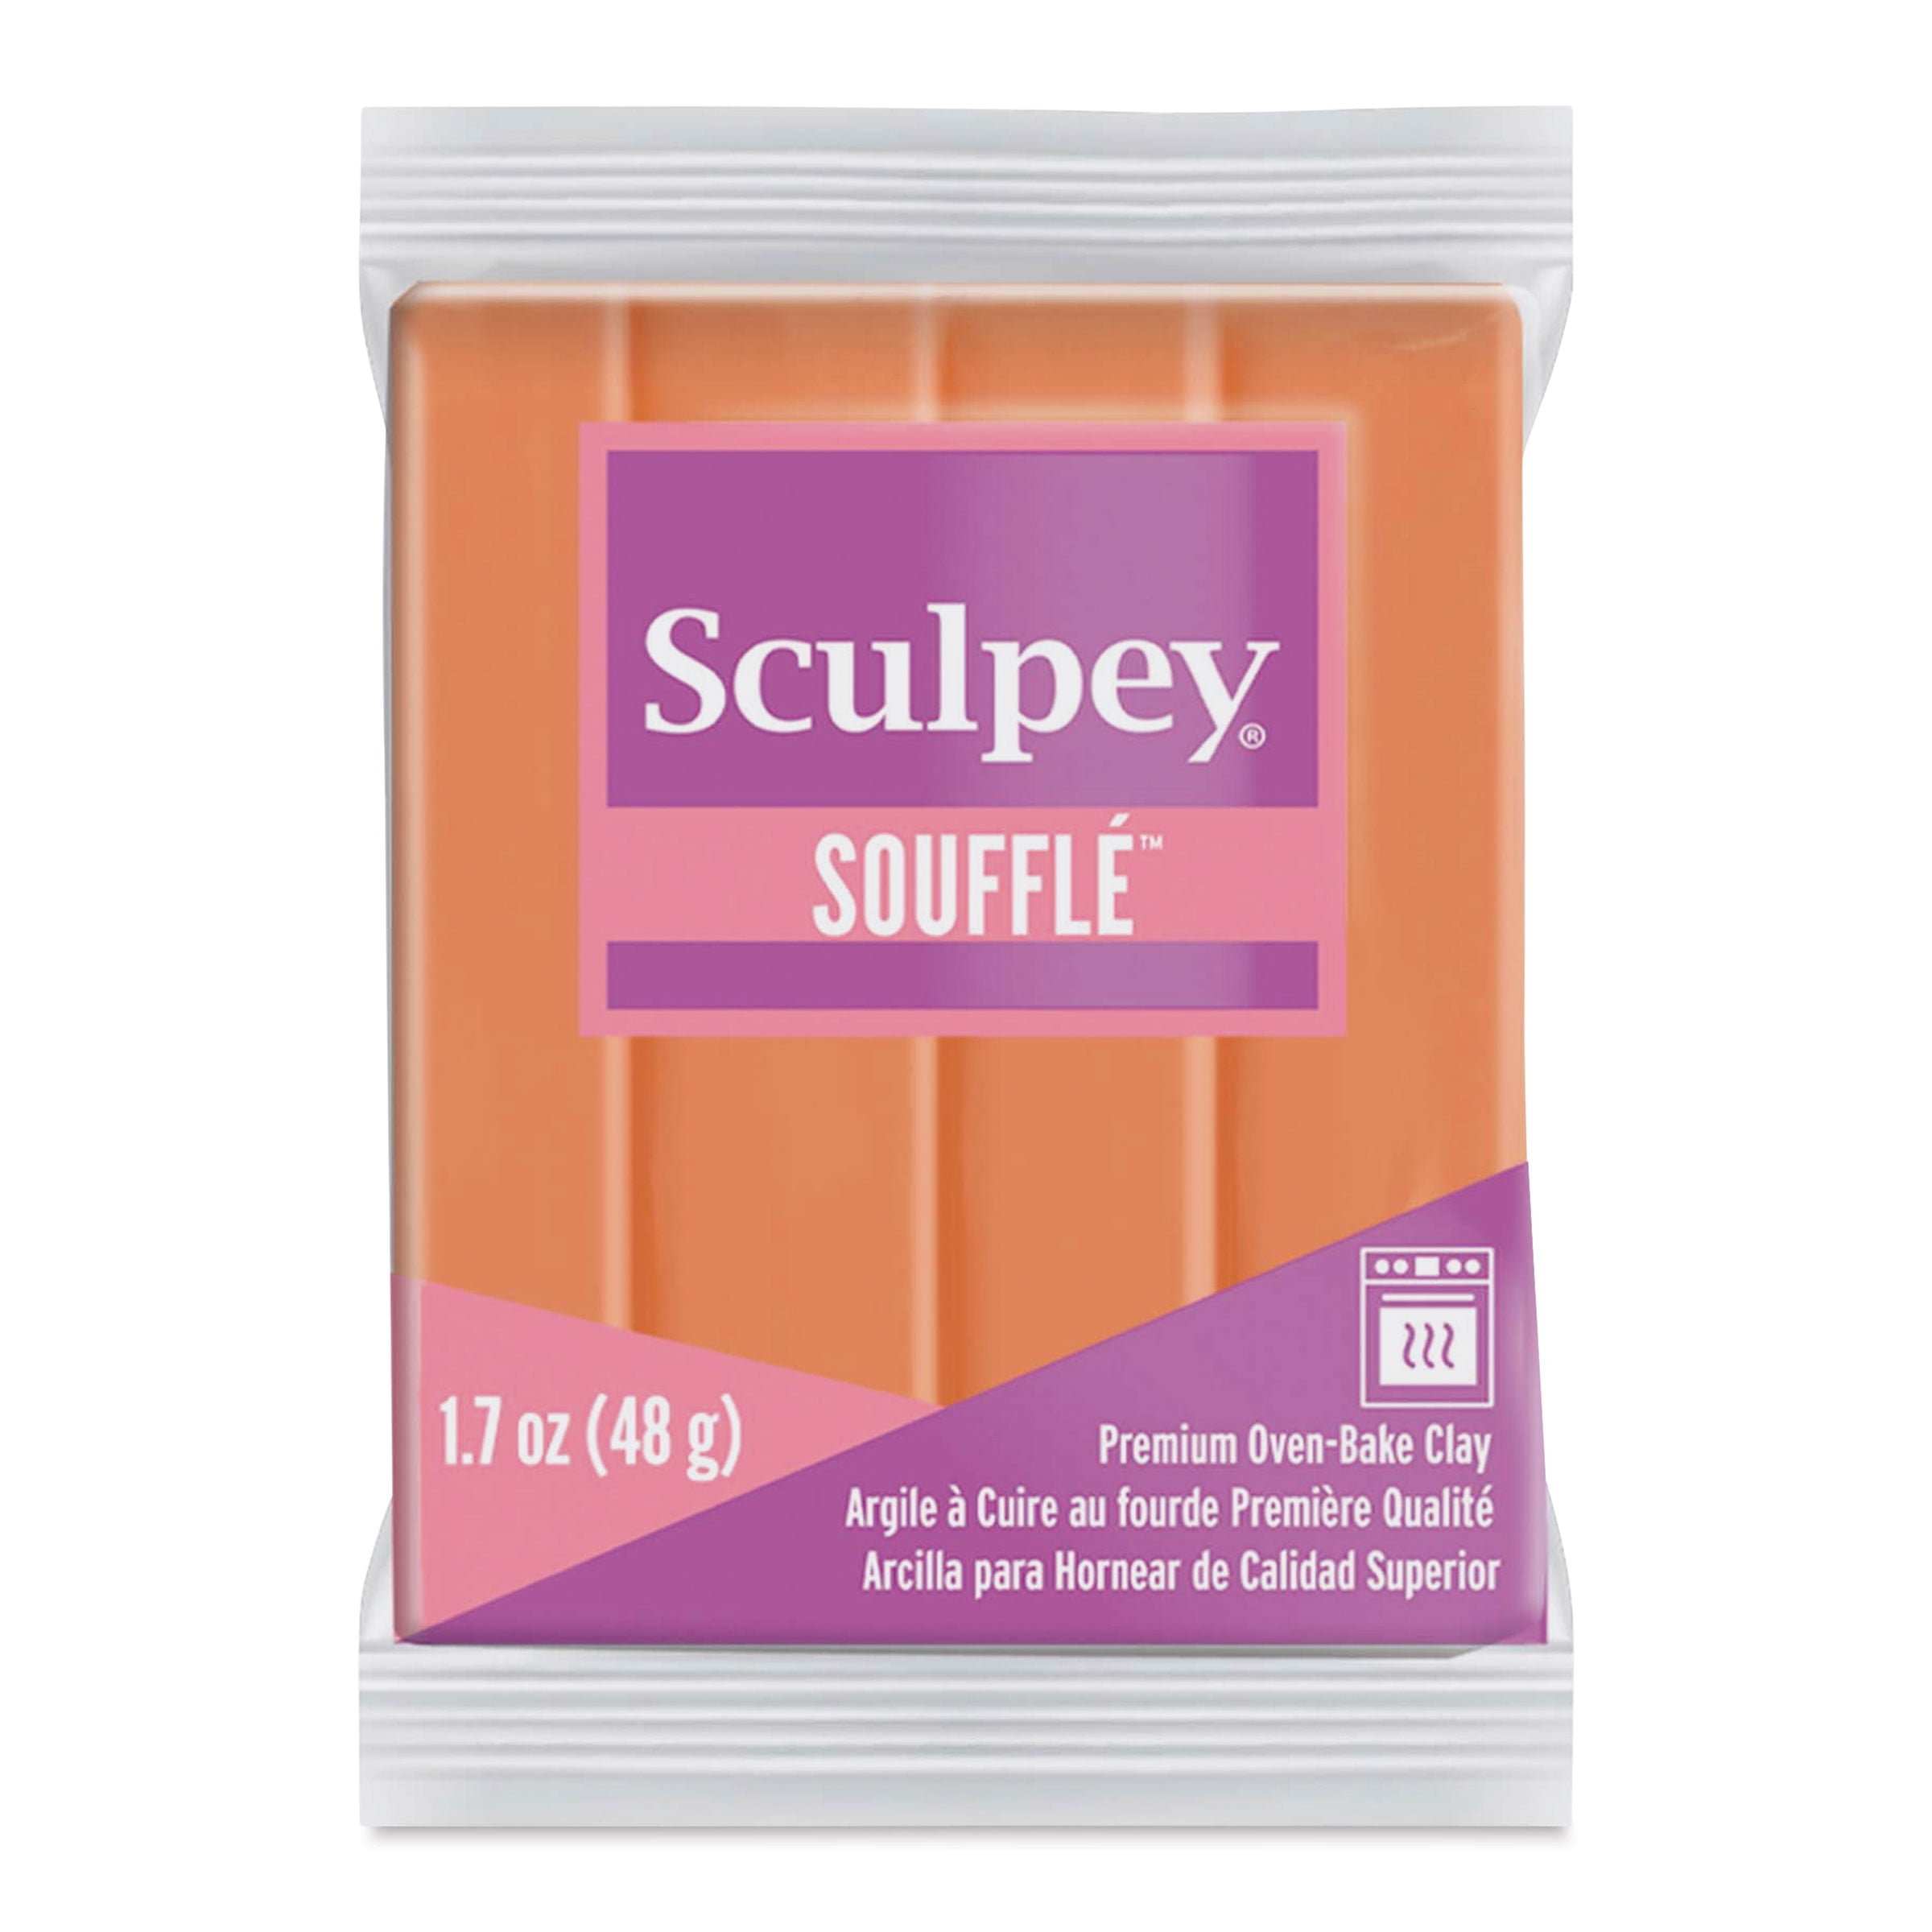 Sculpey Souffle Polymer Clay - Glacier